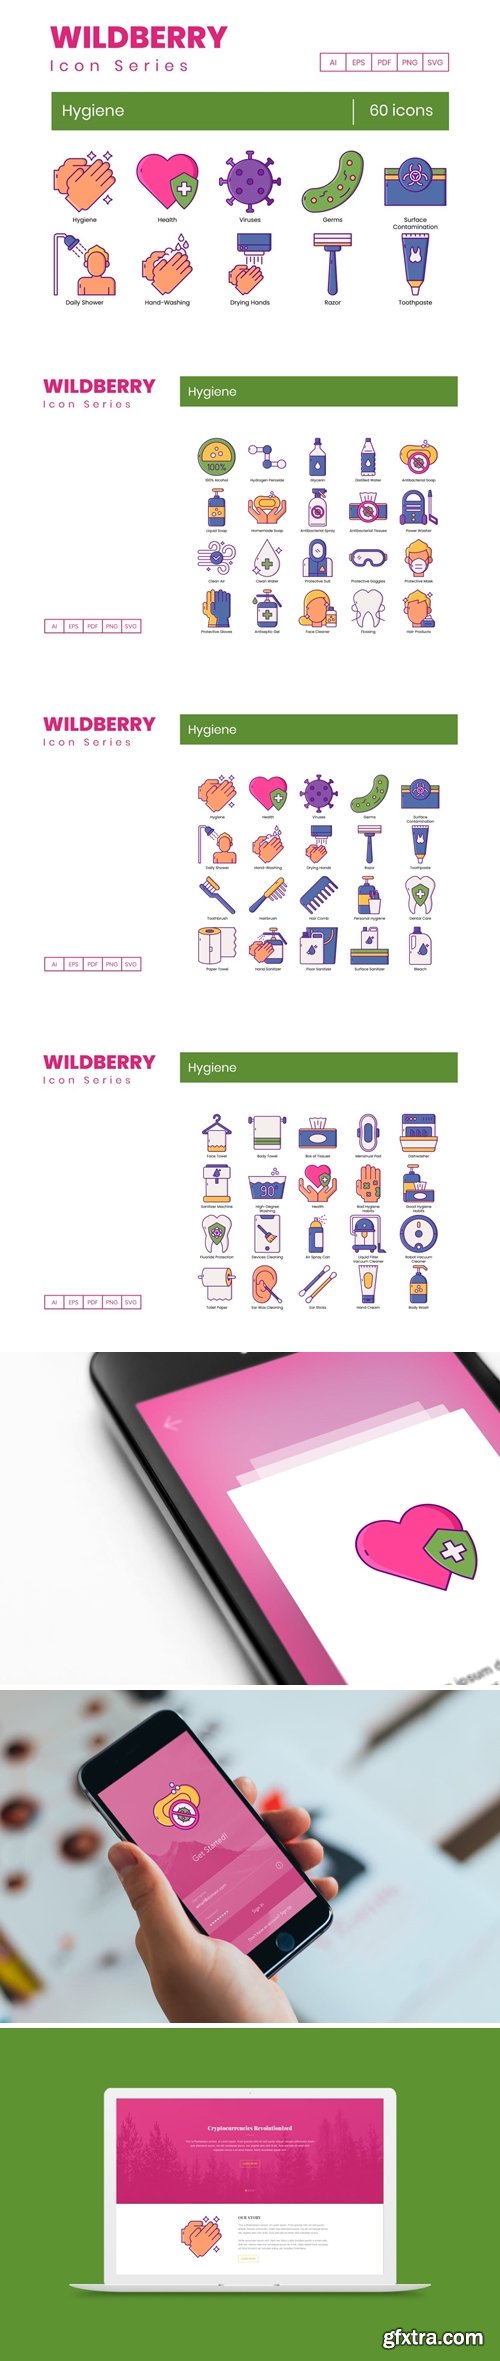 60 Hygiene Icons | Wildberry Series